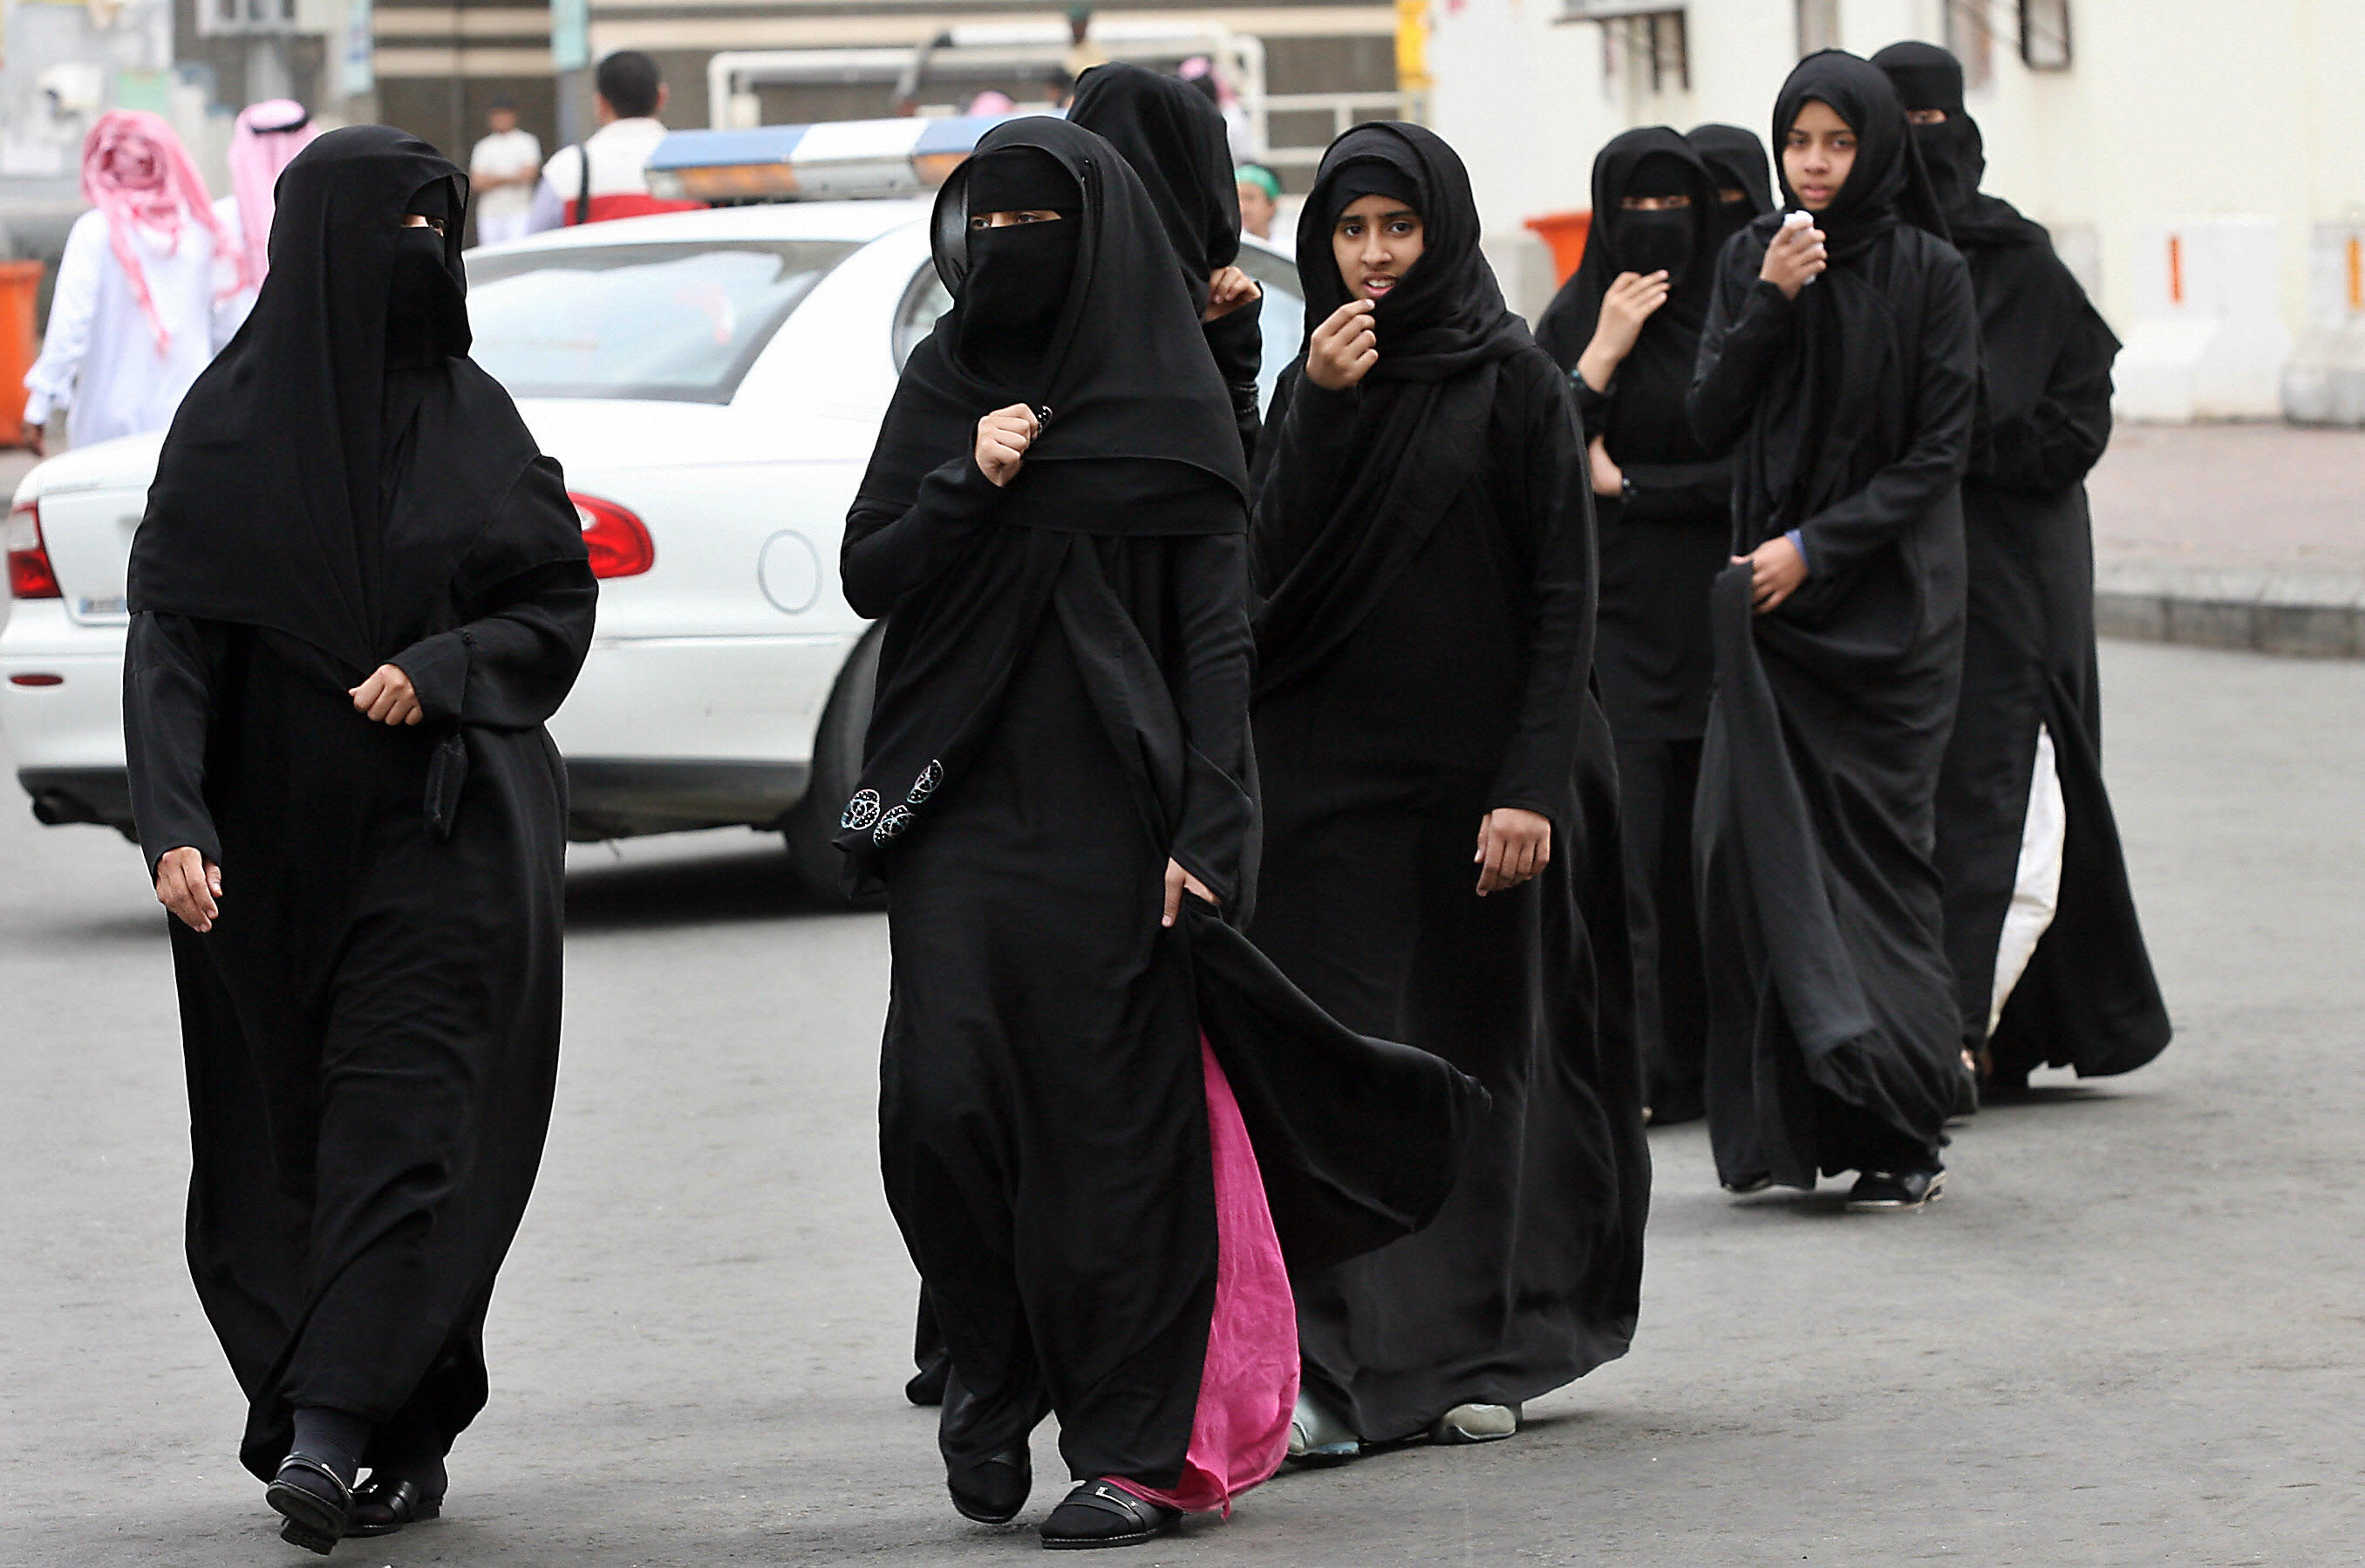 can a woman travel alone to saudi arabia